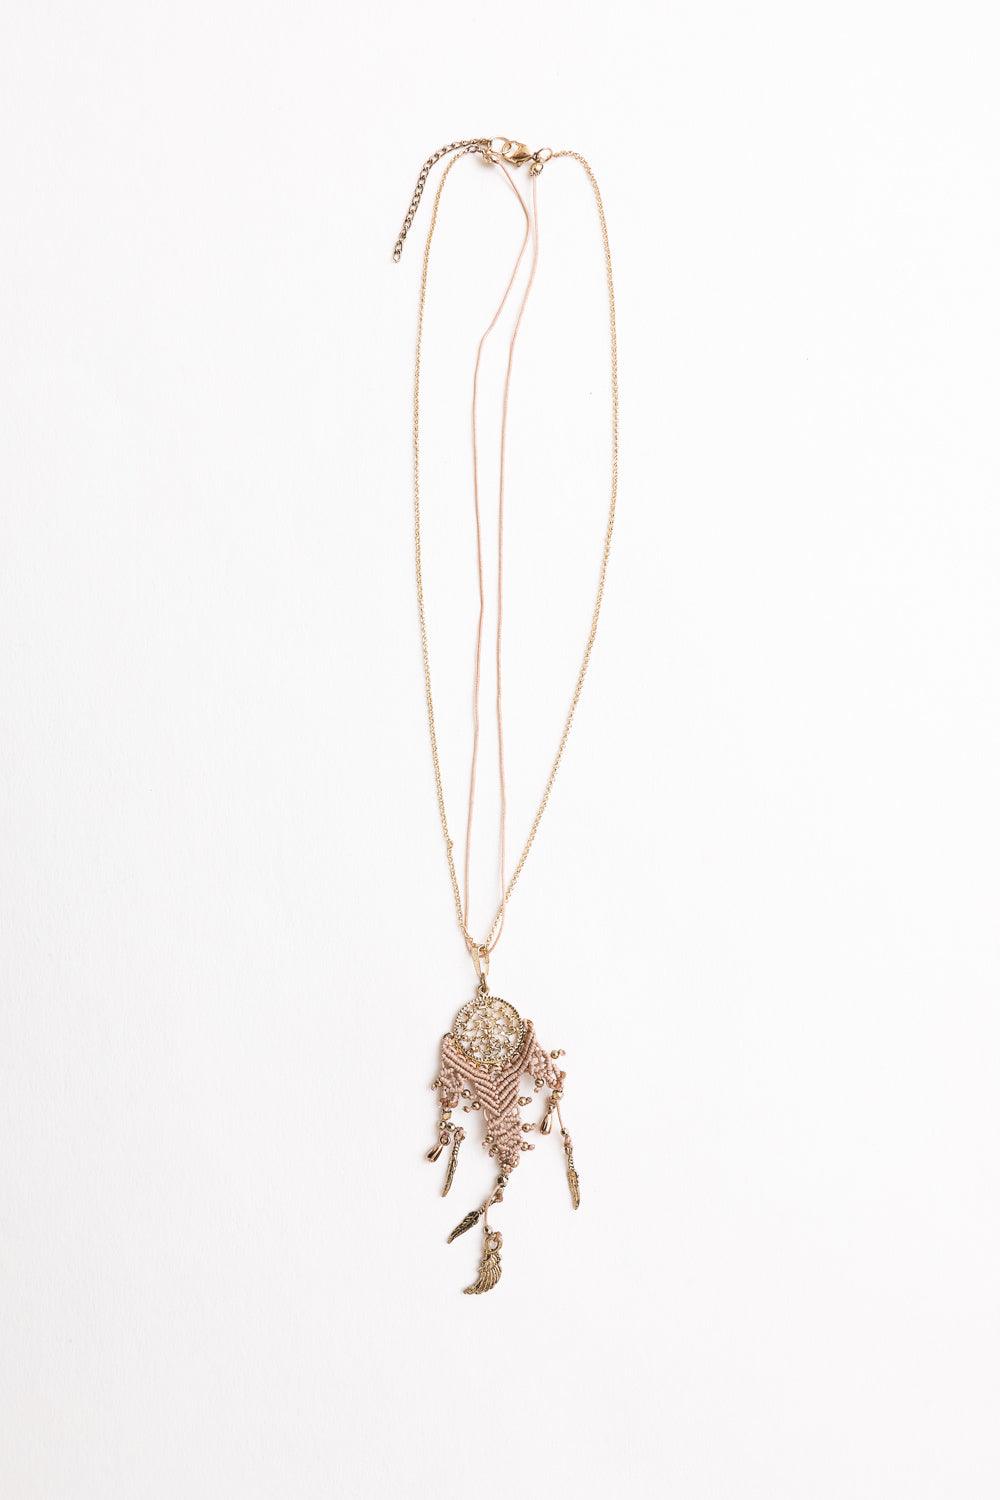 Dream Weave Medallion Necklace - Brand My Case